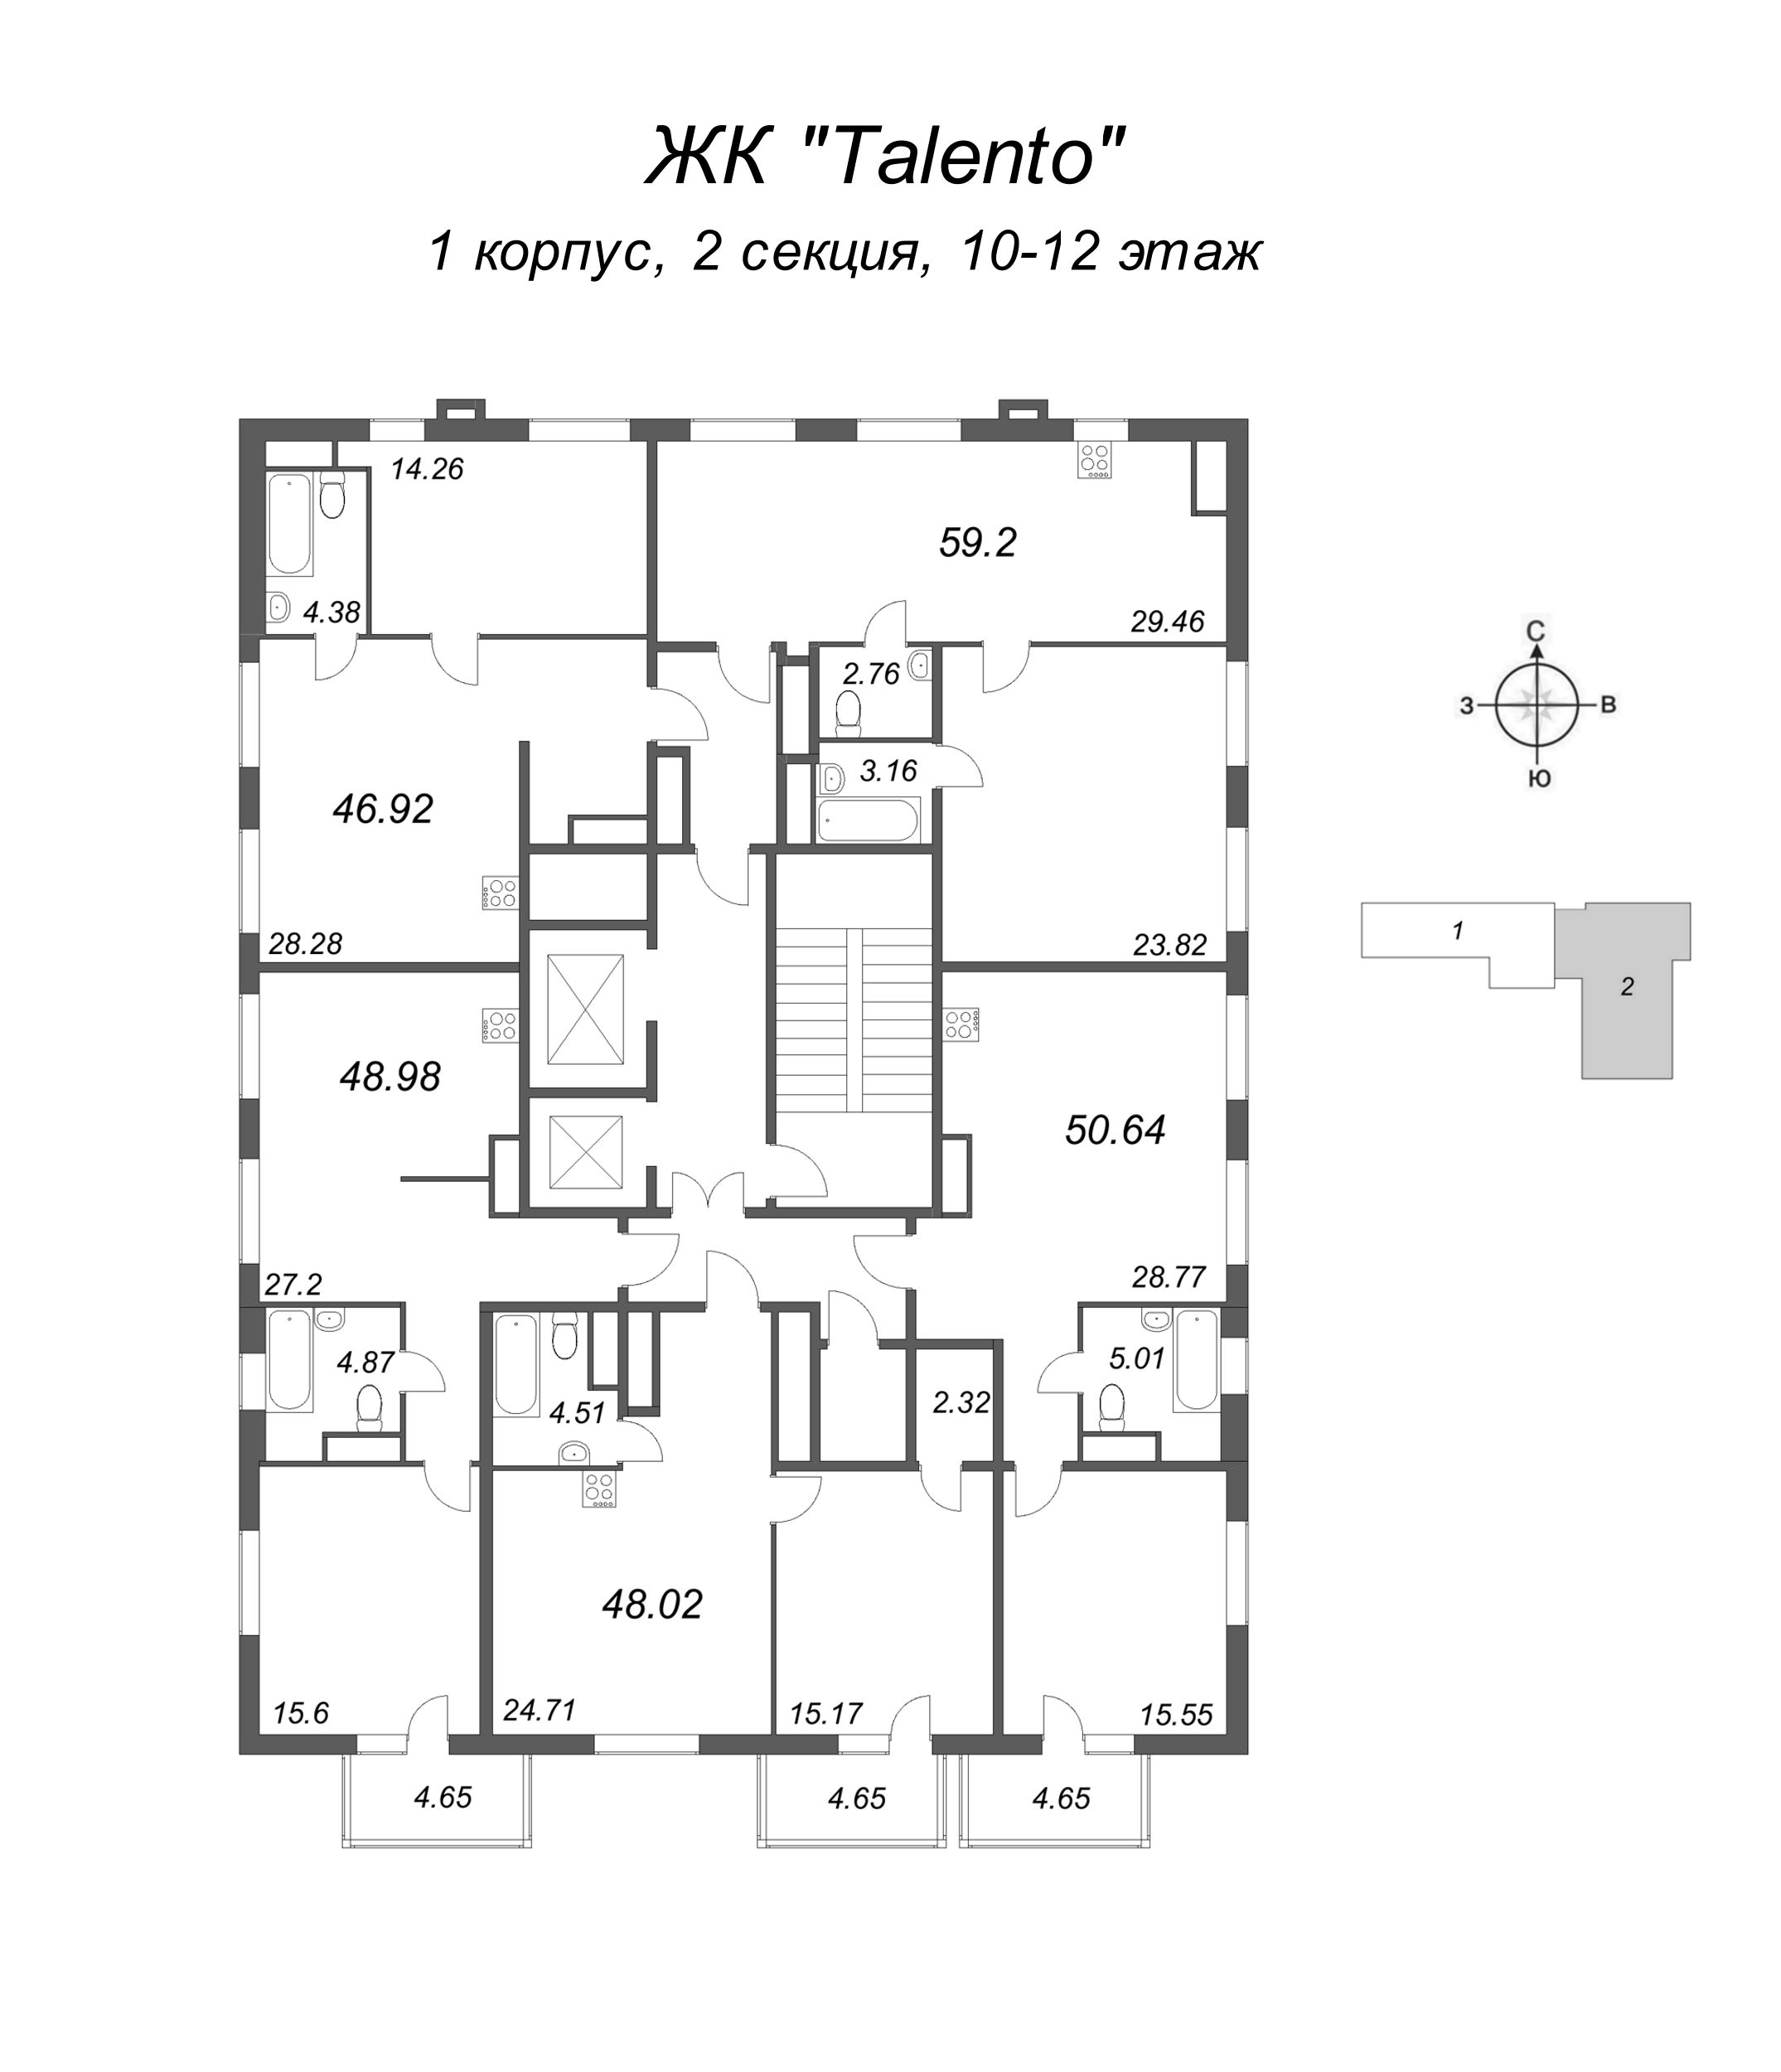 2-комнатная (Евро) квартира, 48.02 м² - планировка этажа